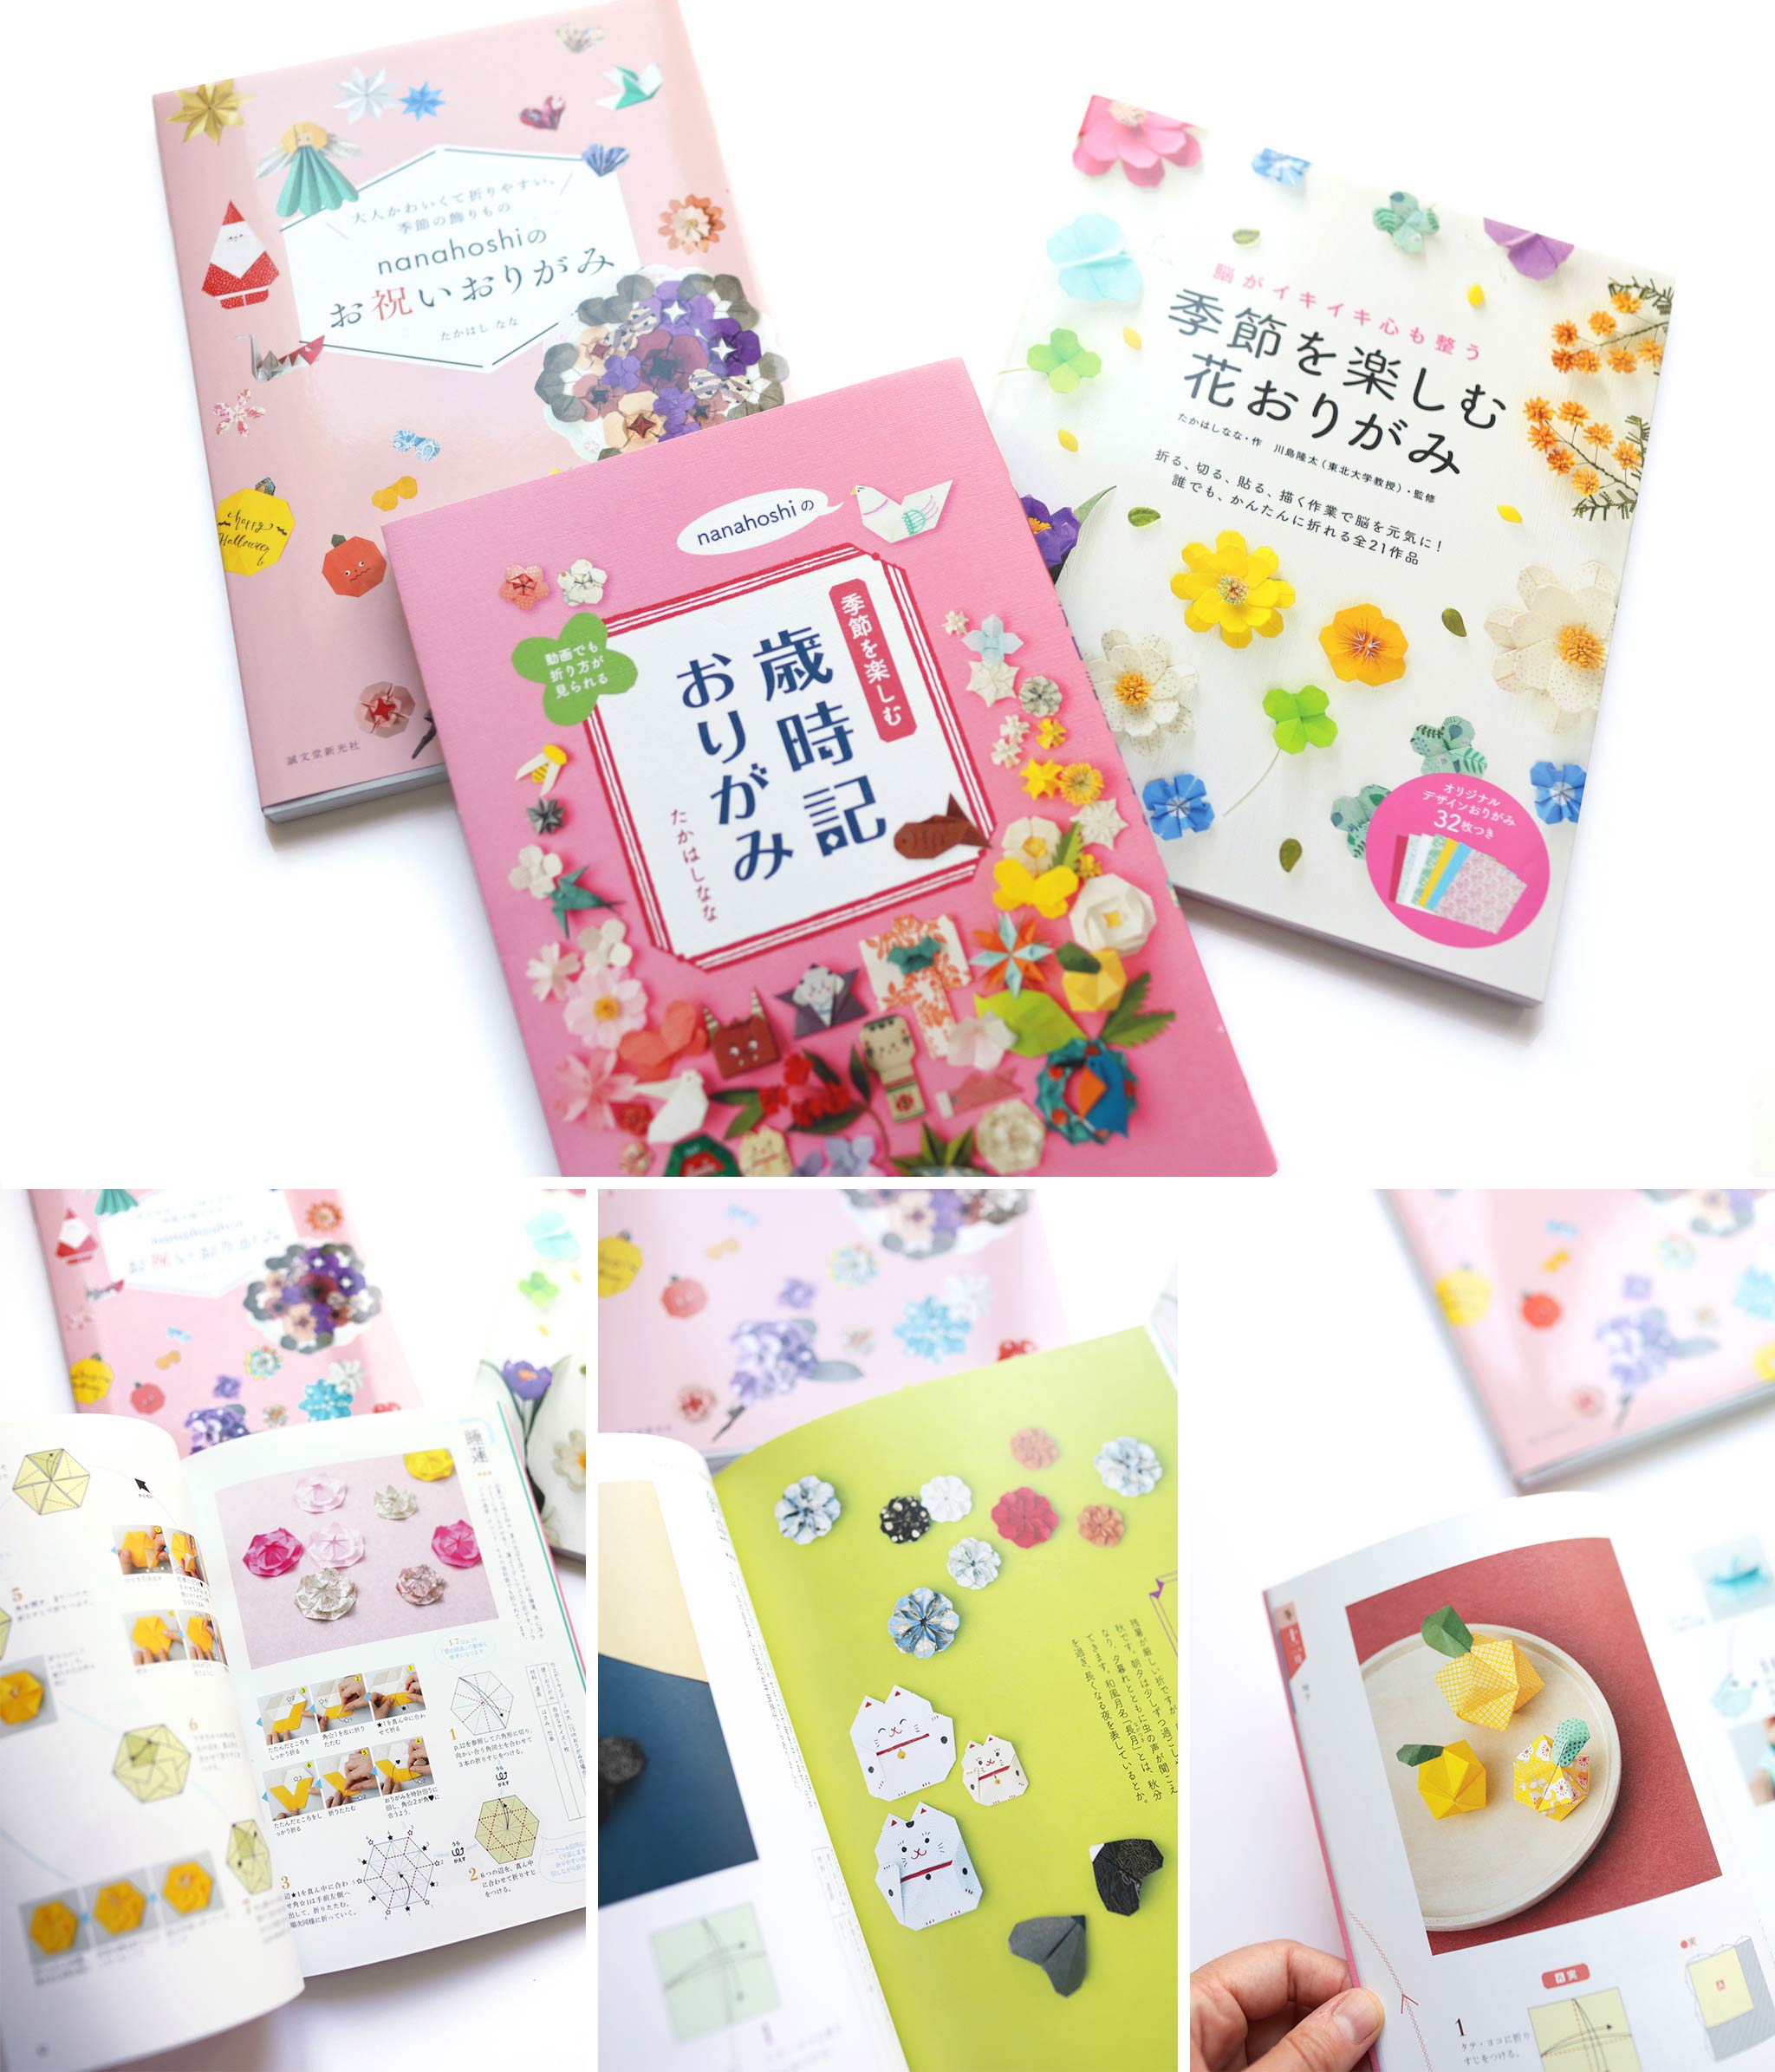 article-blog-nana-takahashi-adorables-origami-ambience-5